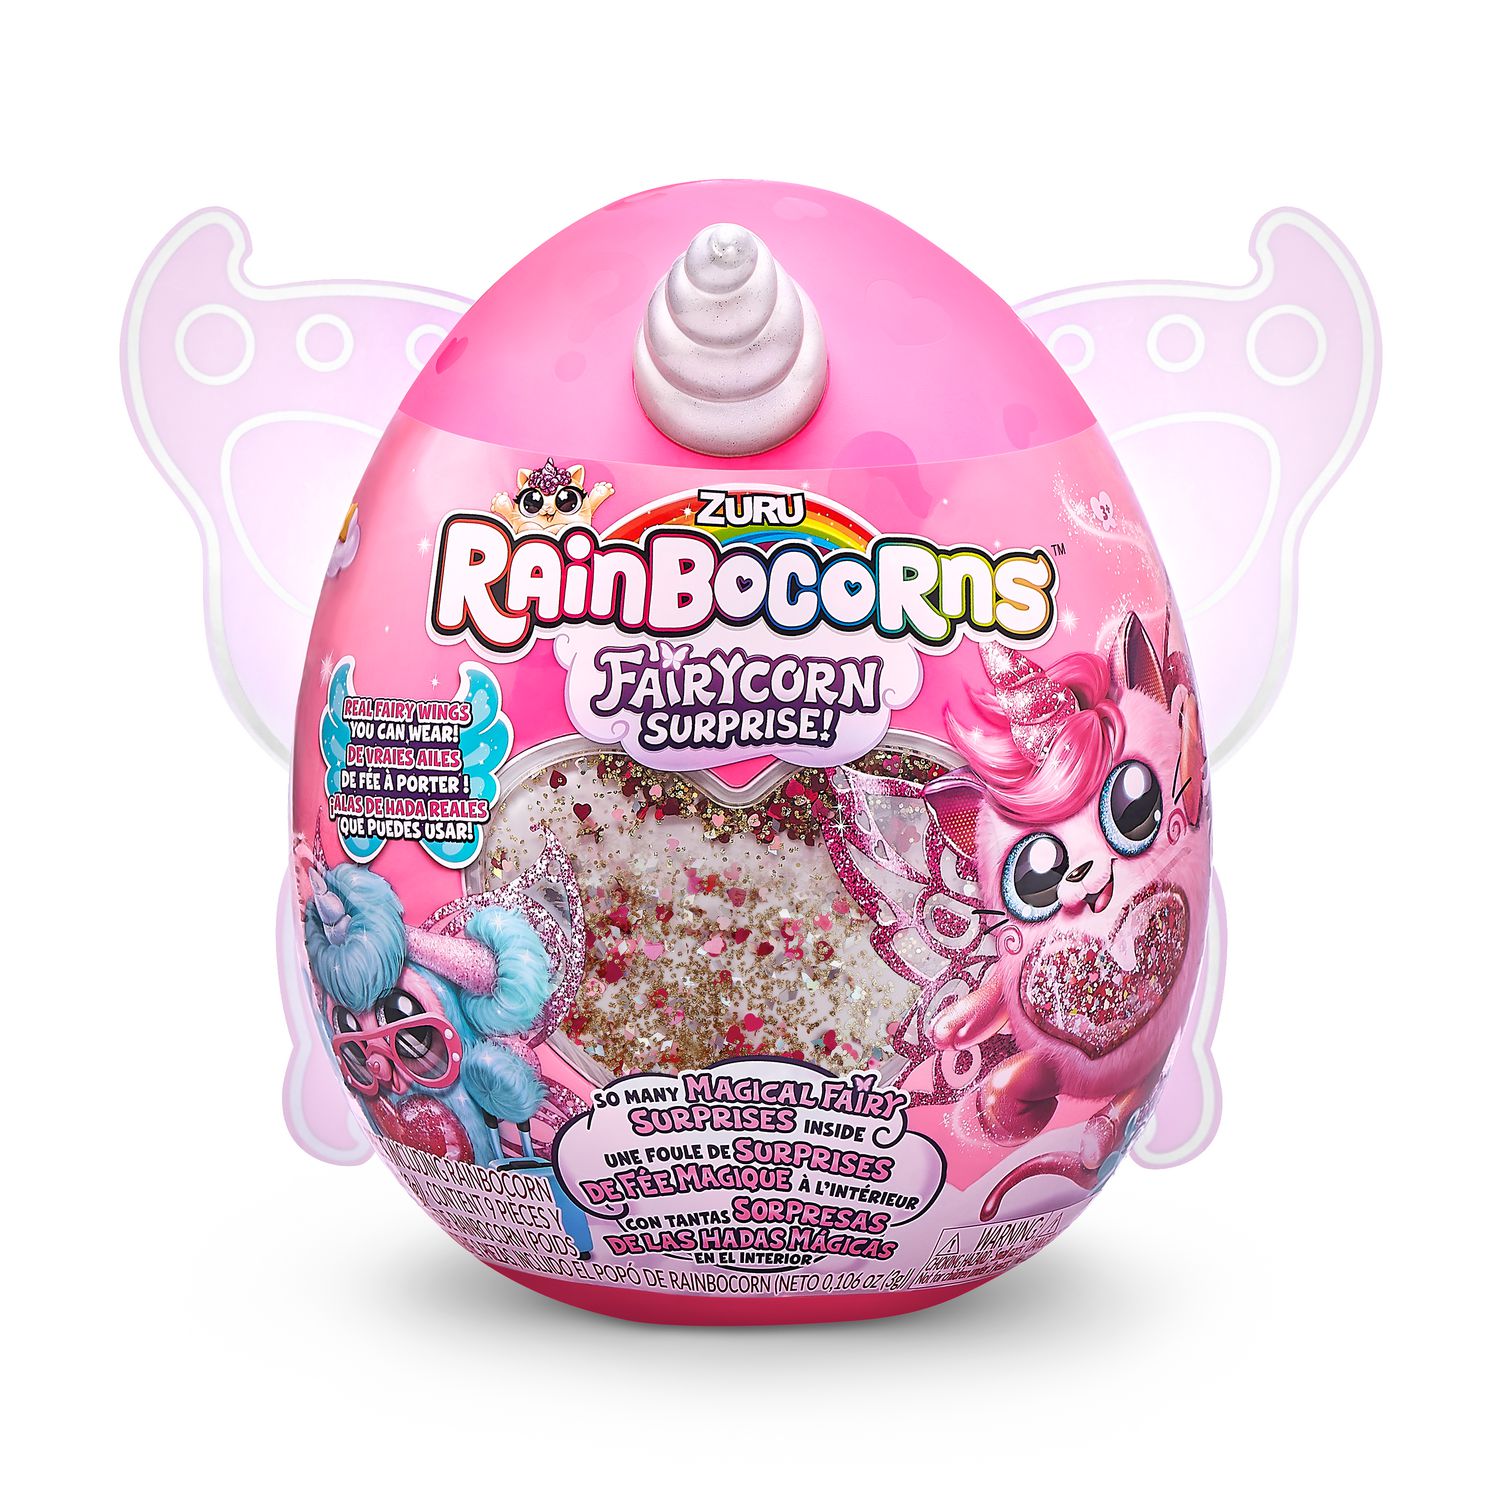 Rainbocorns Fairycorn Surprise Poodle Brand New! 